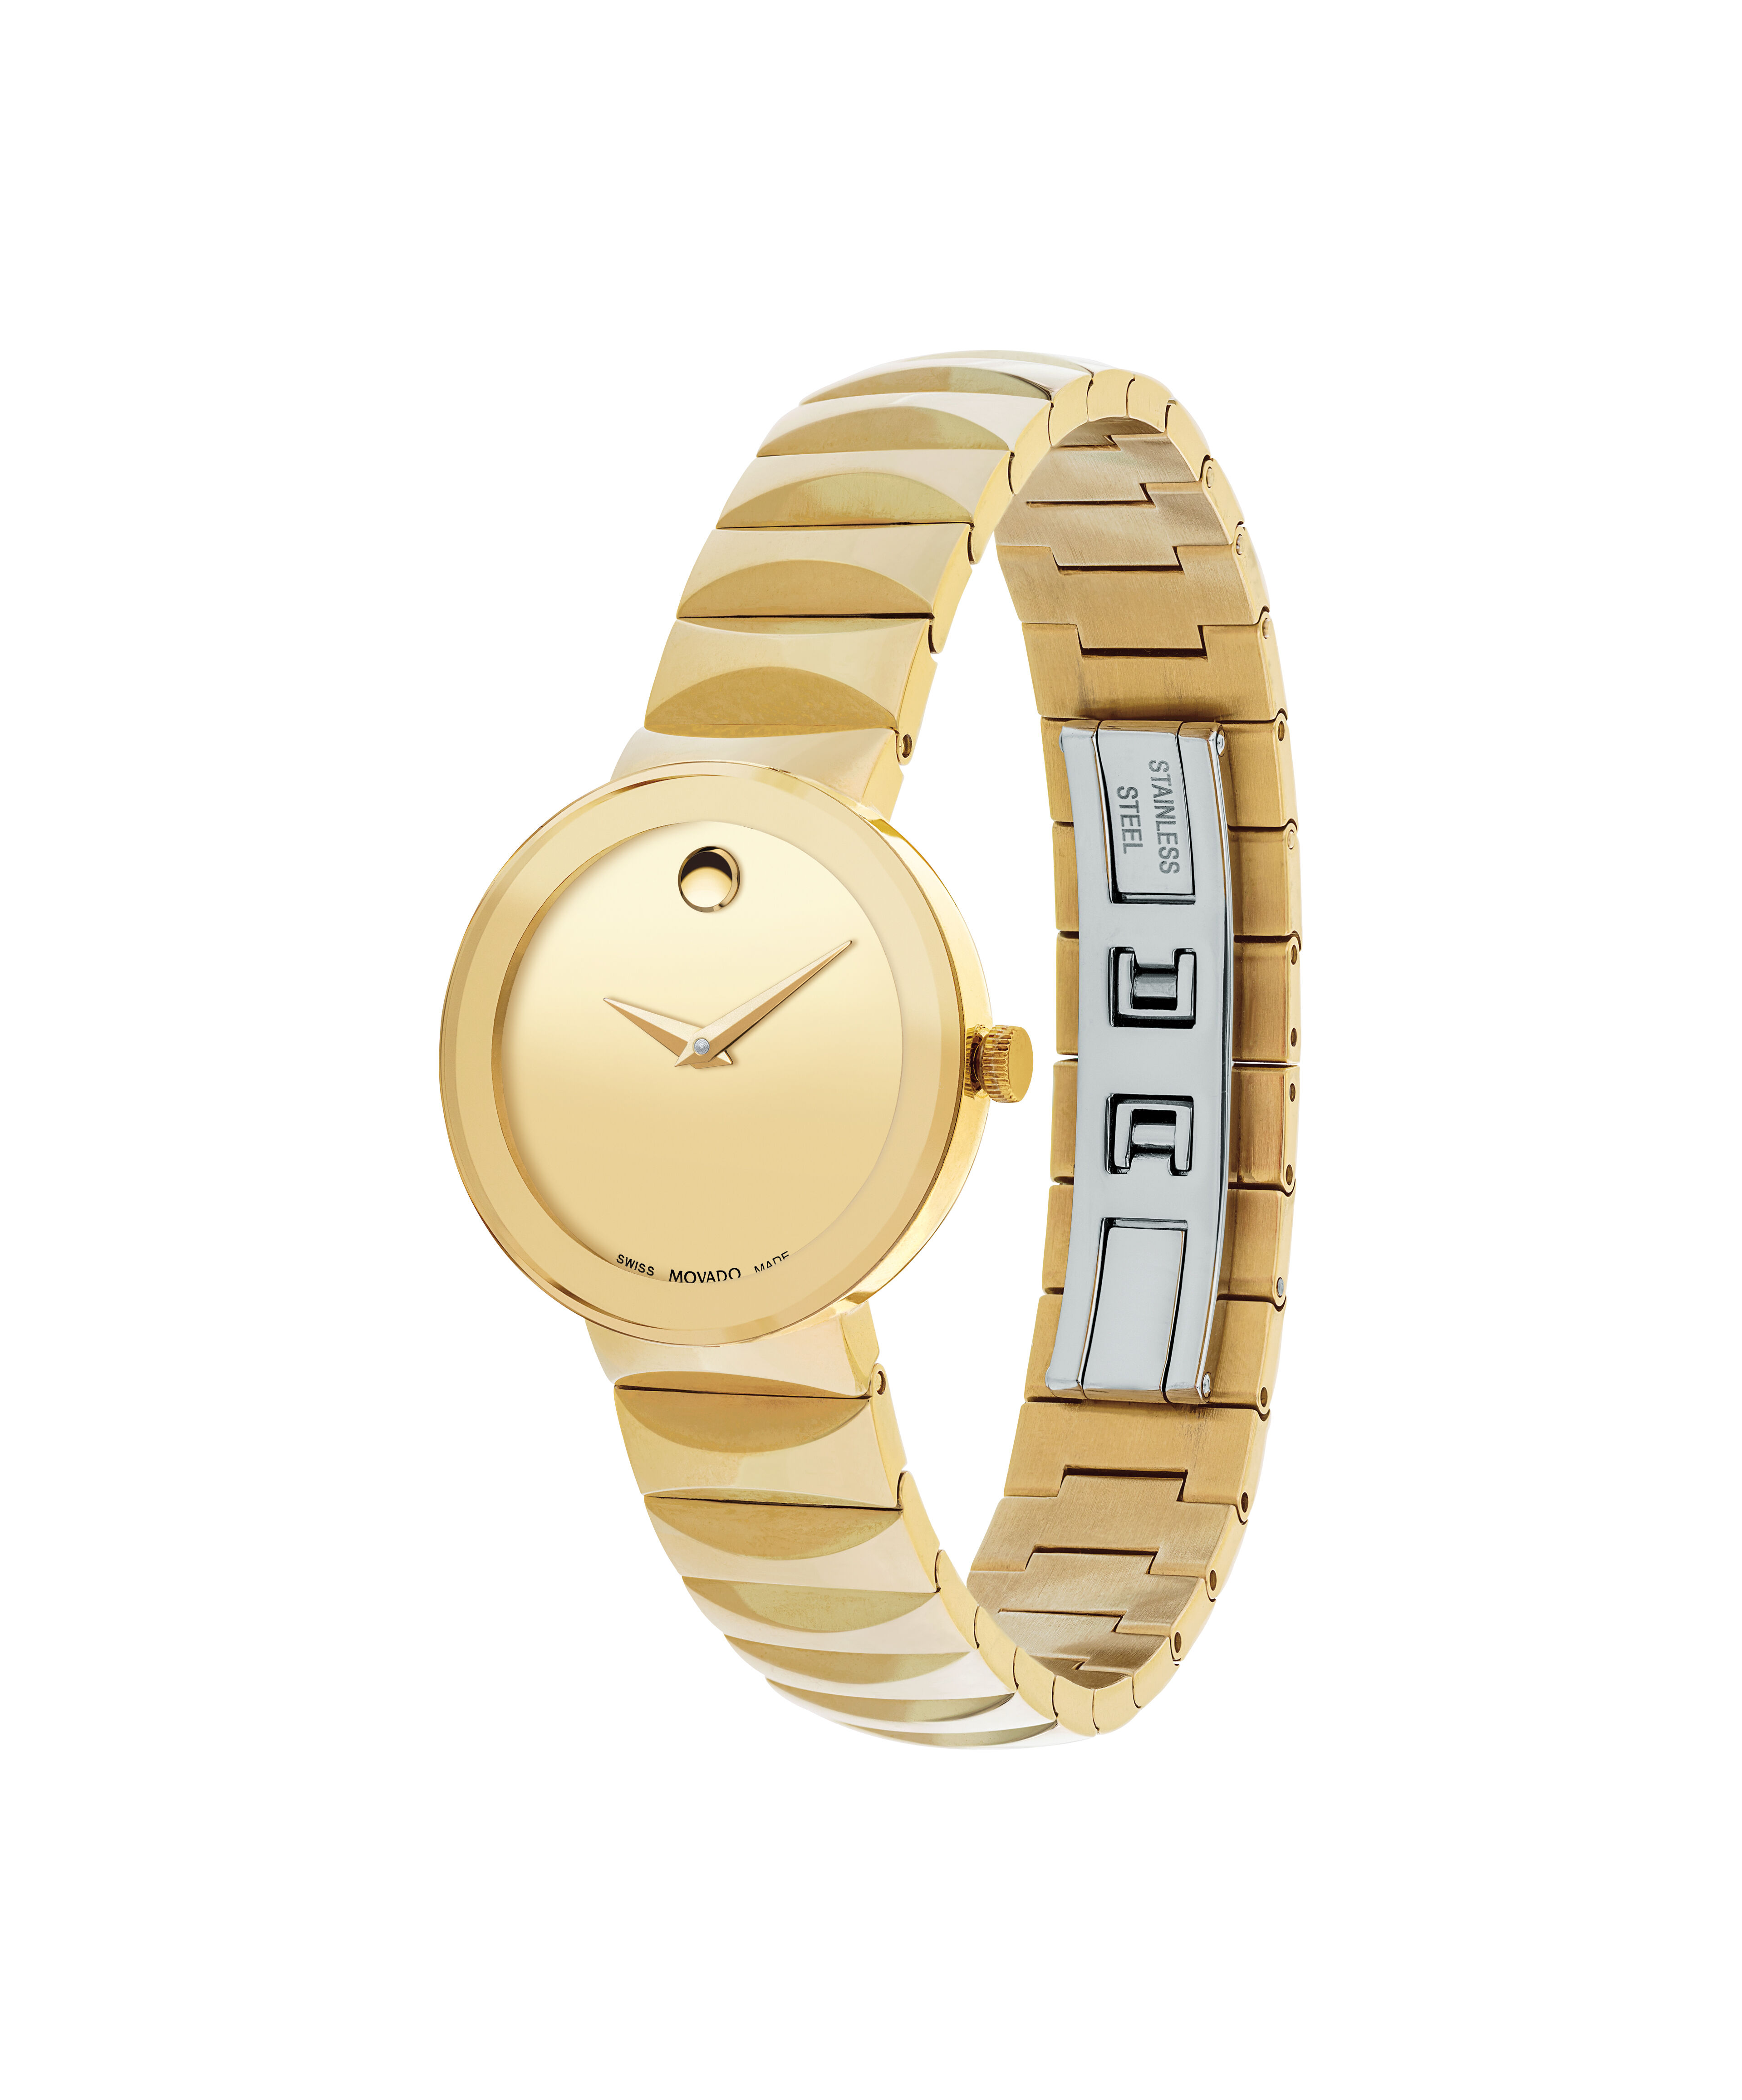 Movado stunning vintage dress watch in 18k gold with Dauphine handsMovado triple calendar - 1 year warranty